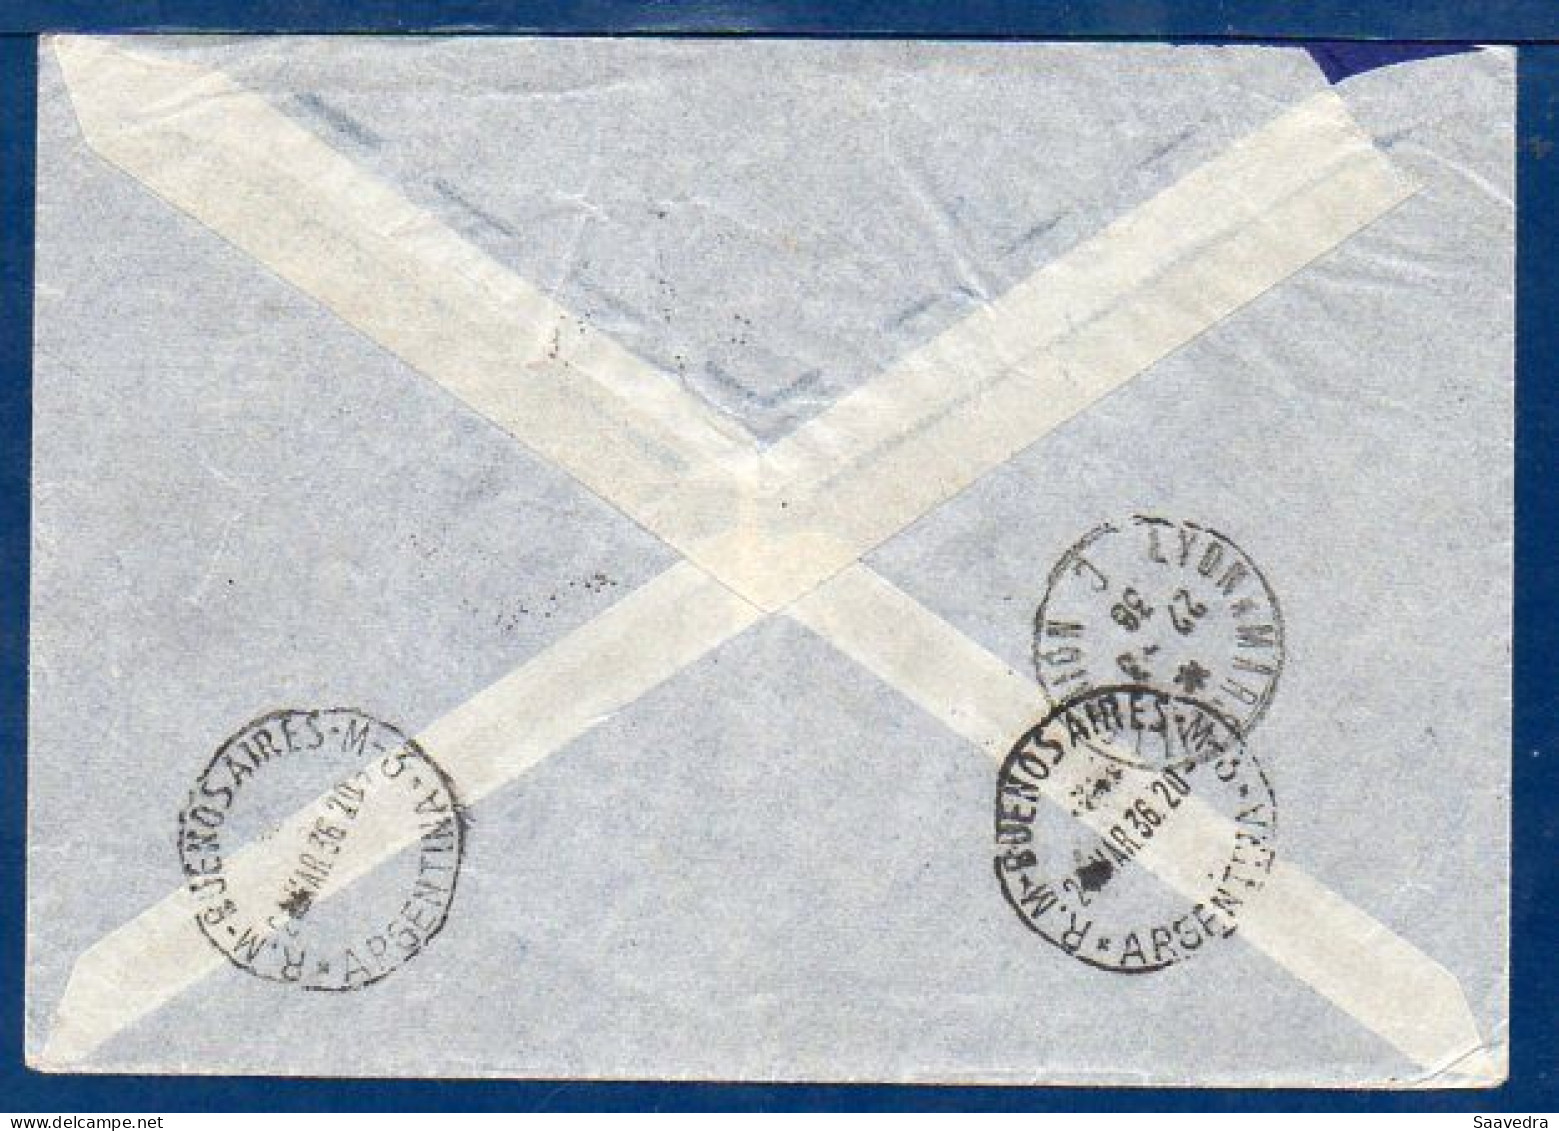 Switzerland To Argentina, 1936, Via Air France  (008) - Cartas & Documentos